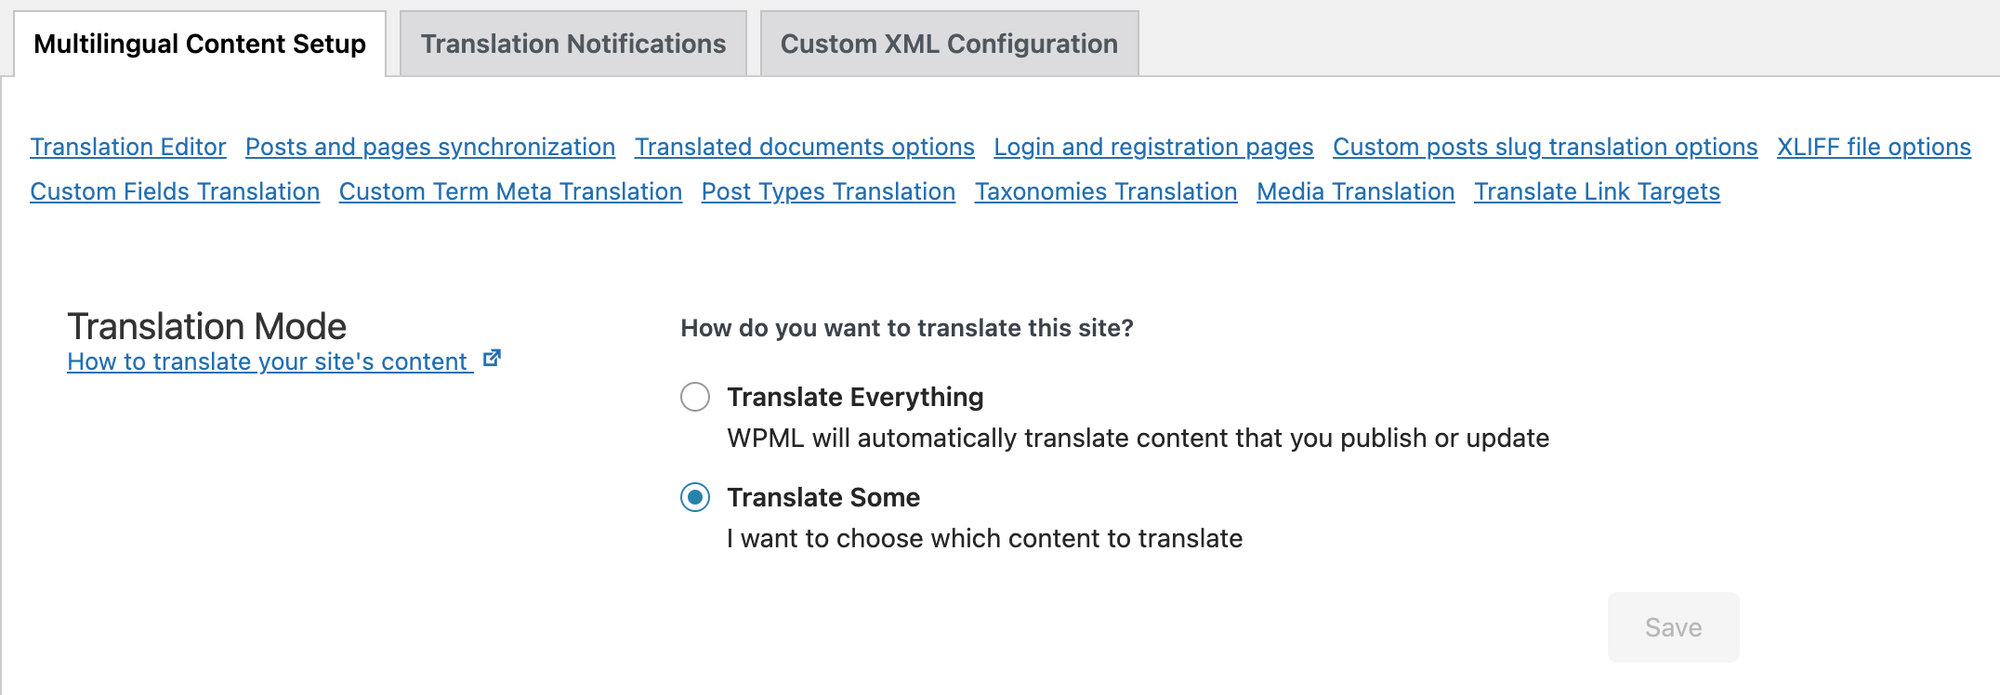 Translation Mode with WPML